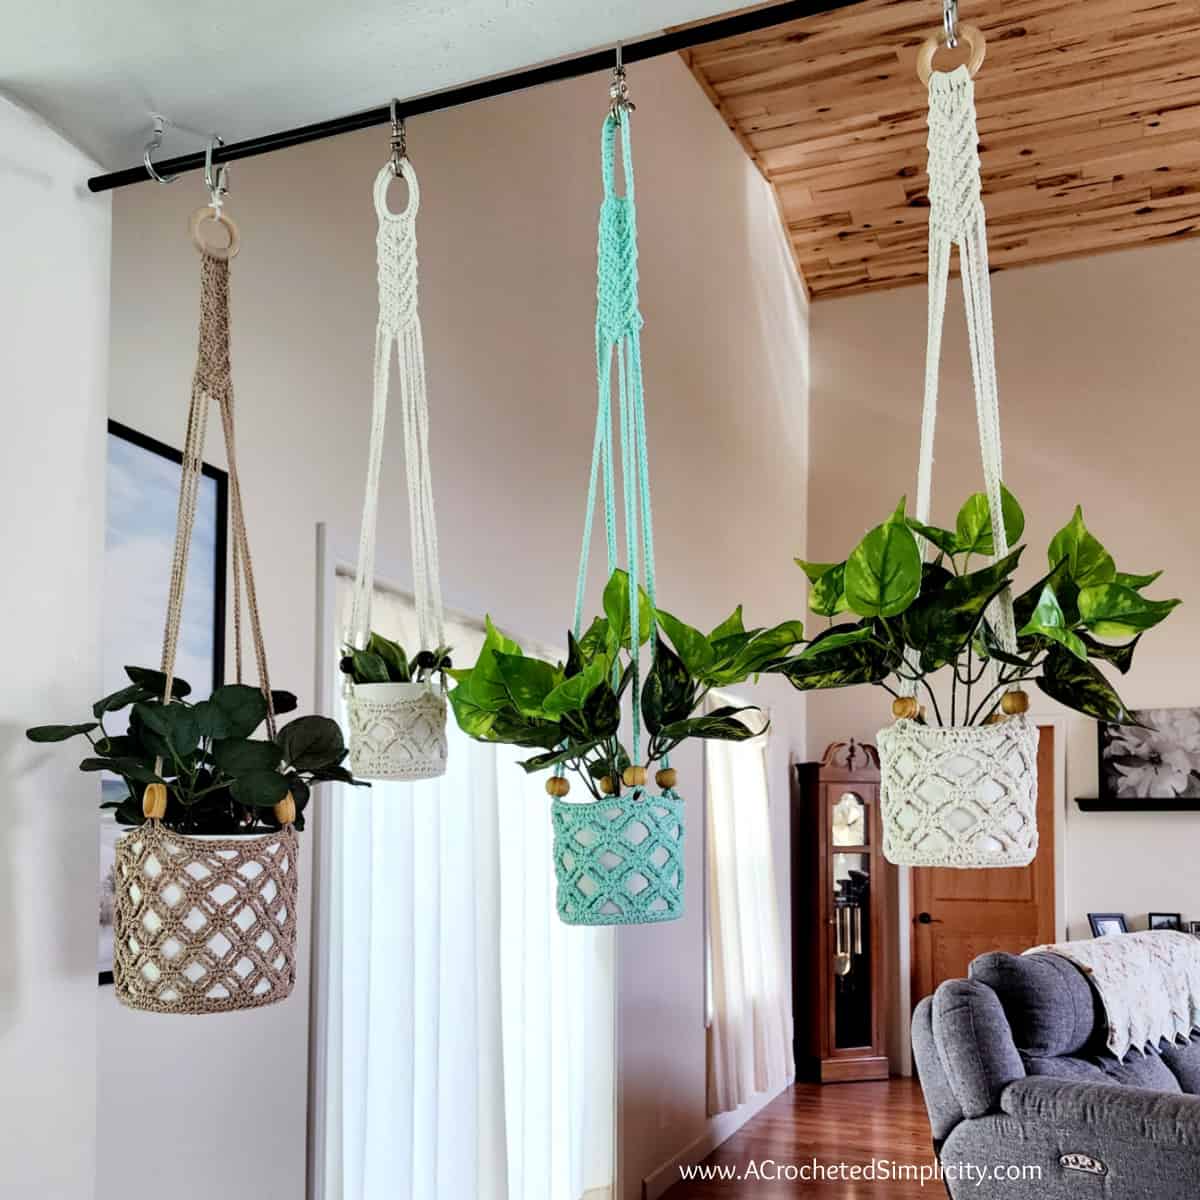 Hanging Chains for Plants Flower Pot Basket Chains Chain Hangers Hanging Planter Basket Hanging Flower Pots 50cm, 50cm Style 1